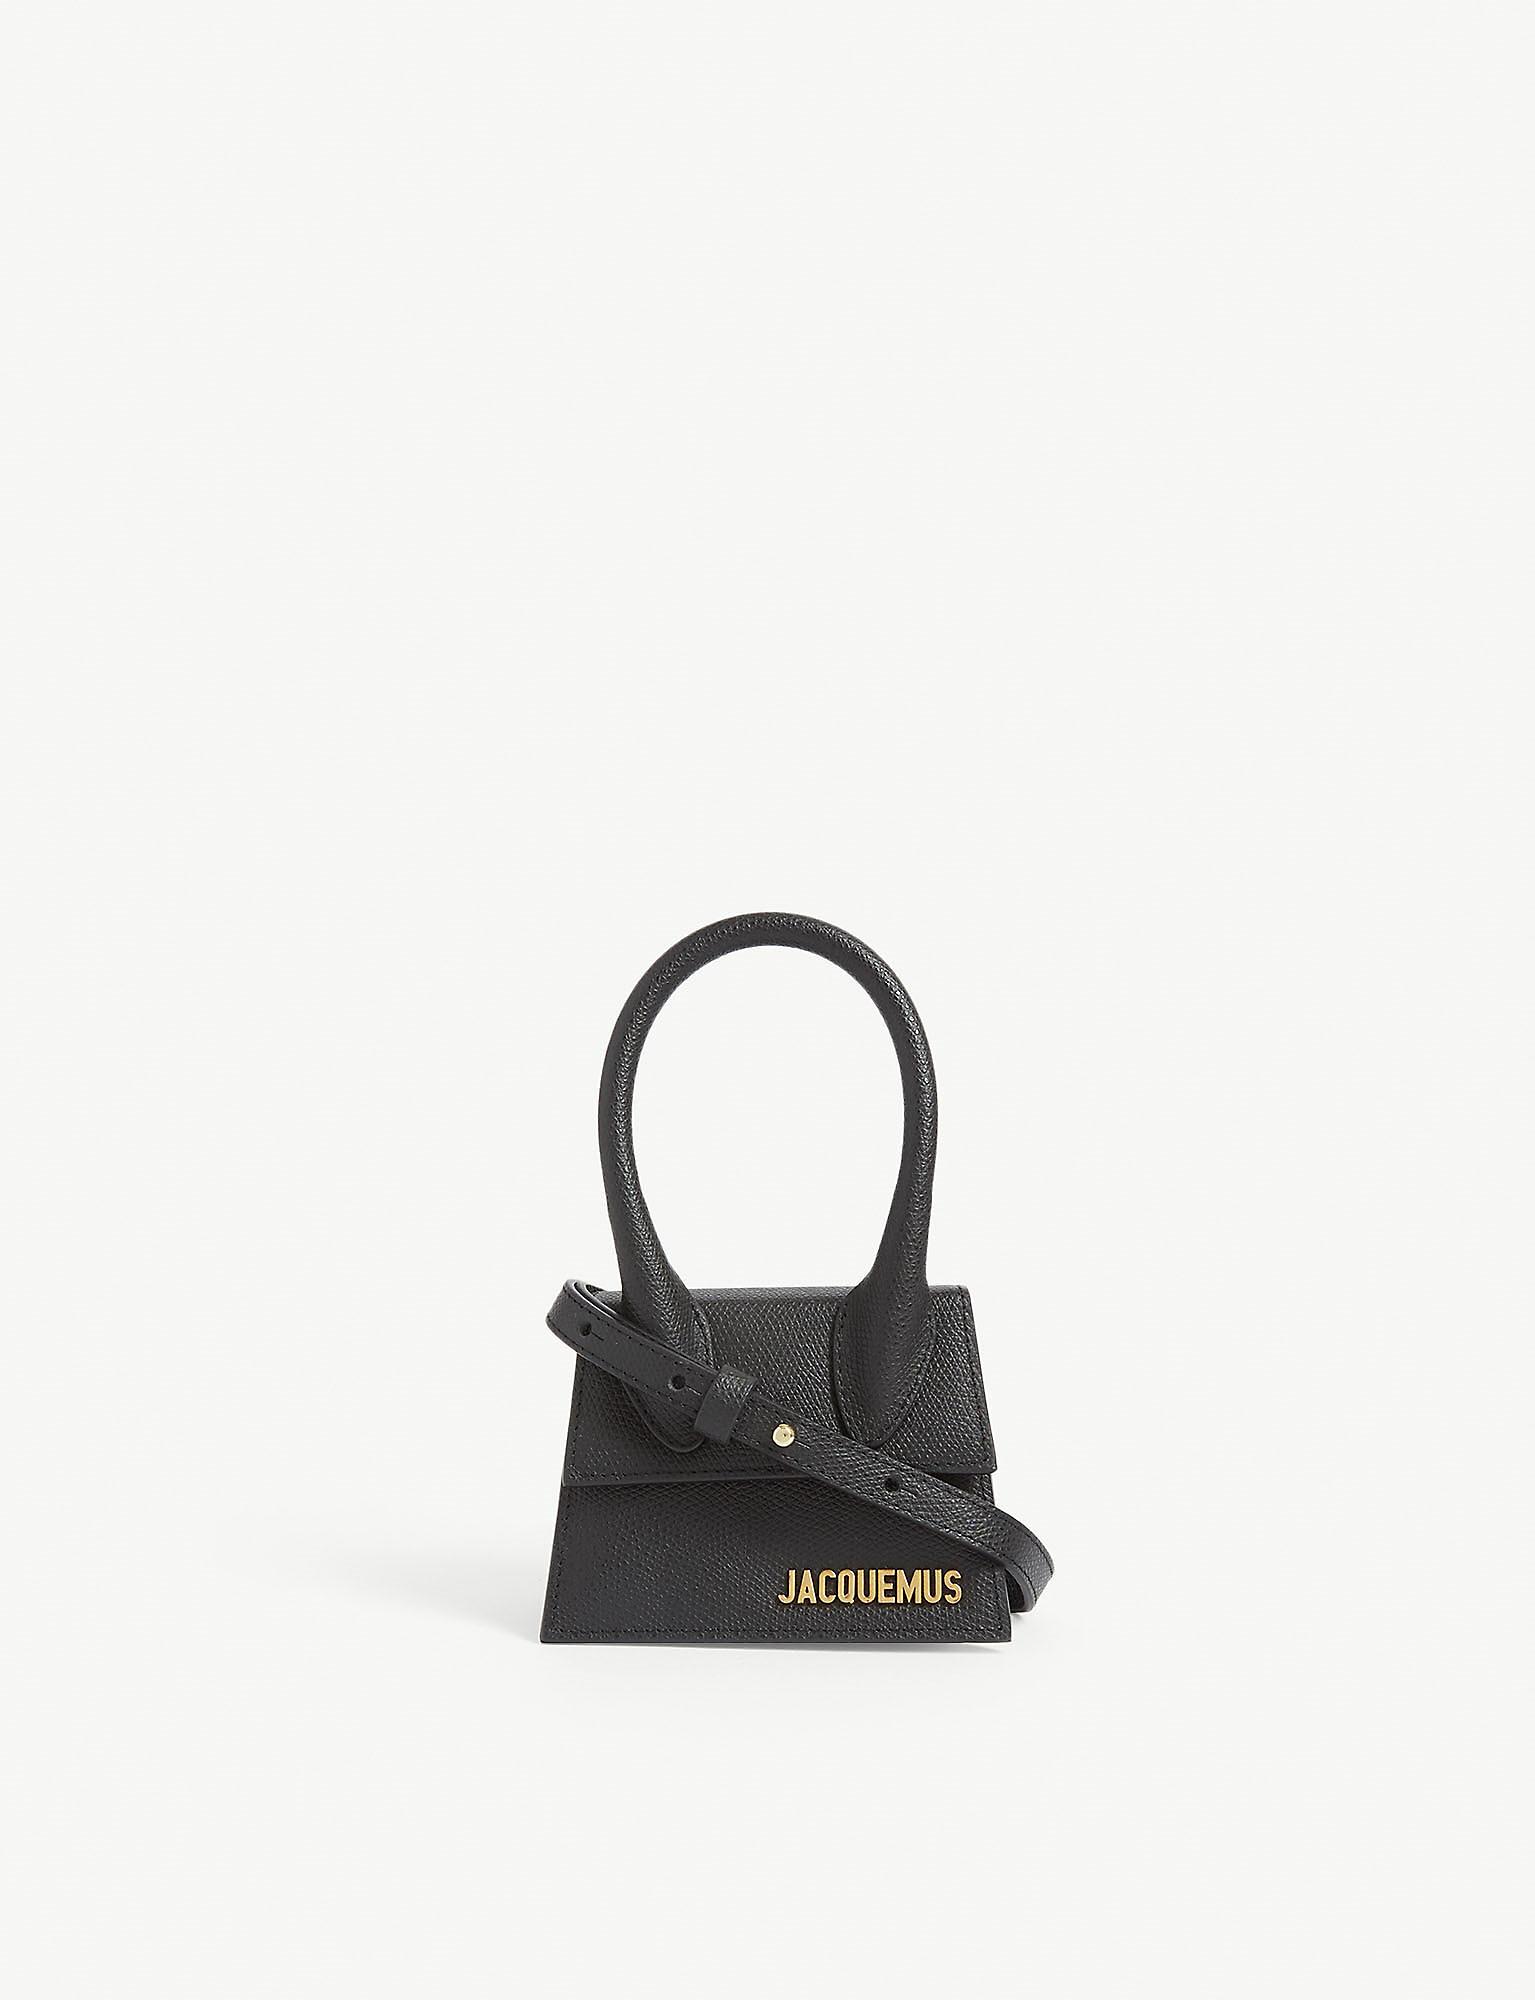 Jacquemus Jacquemus 'Le Chiquito' Mini Bag - Stylemyle